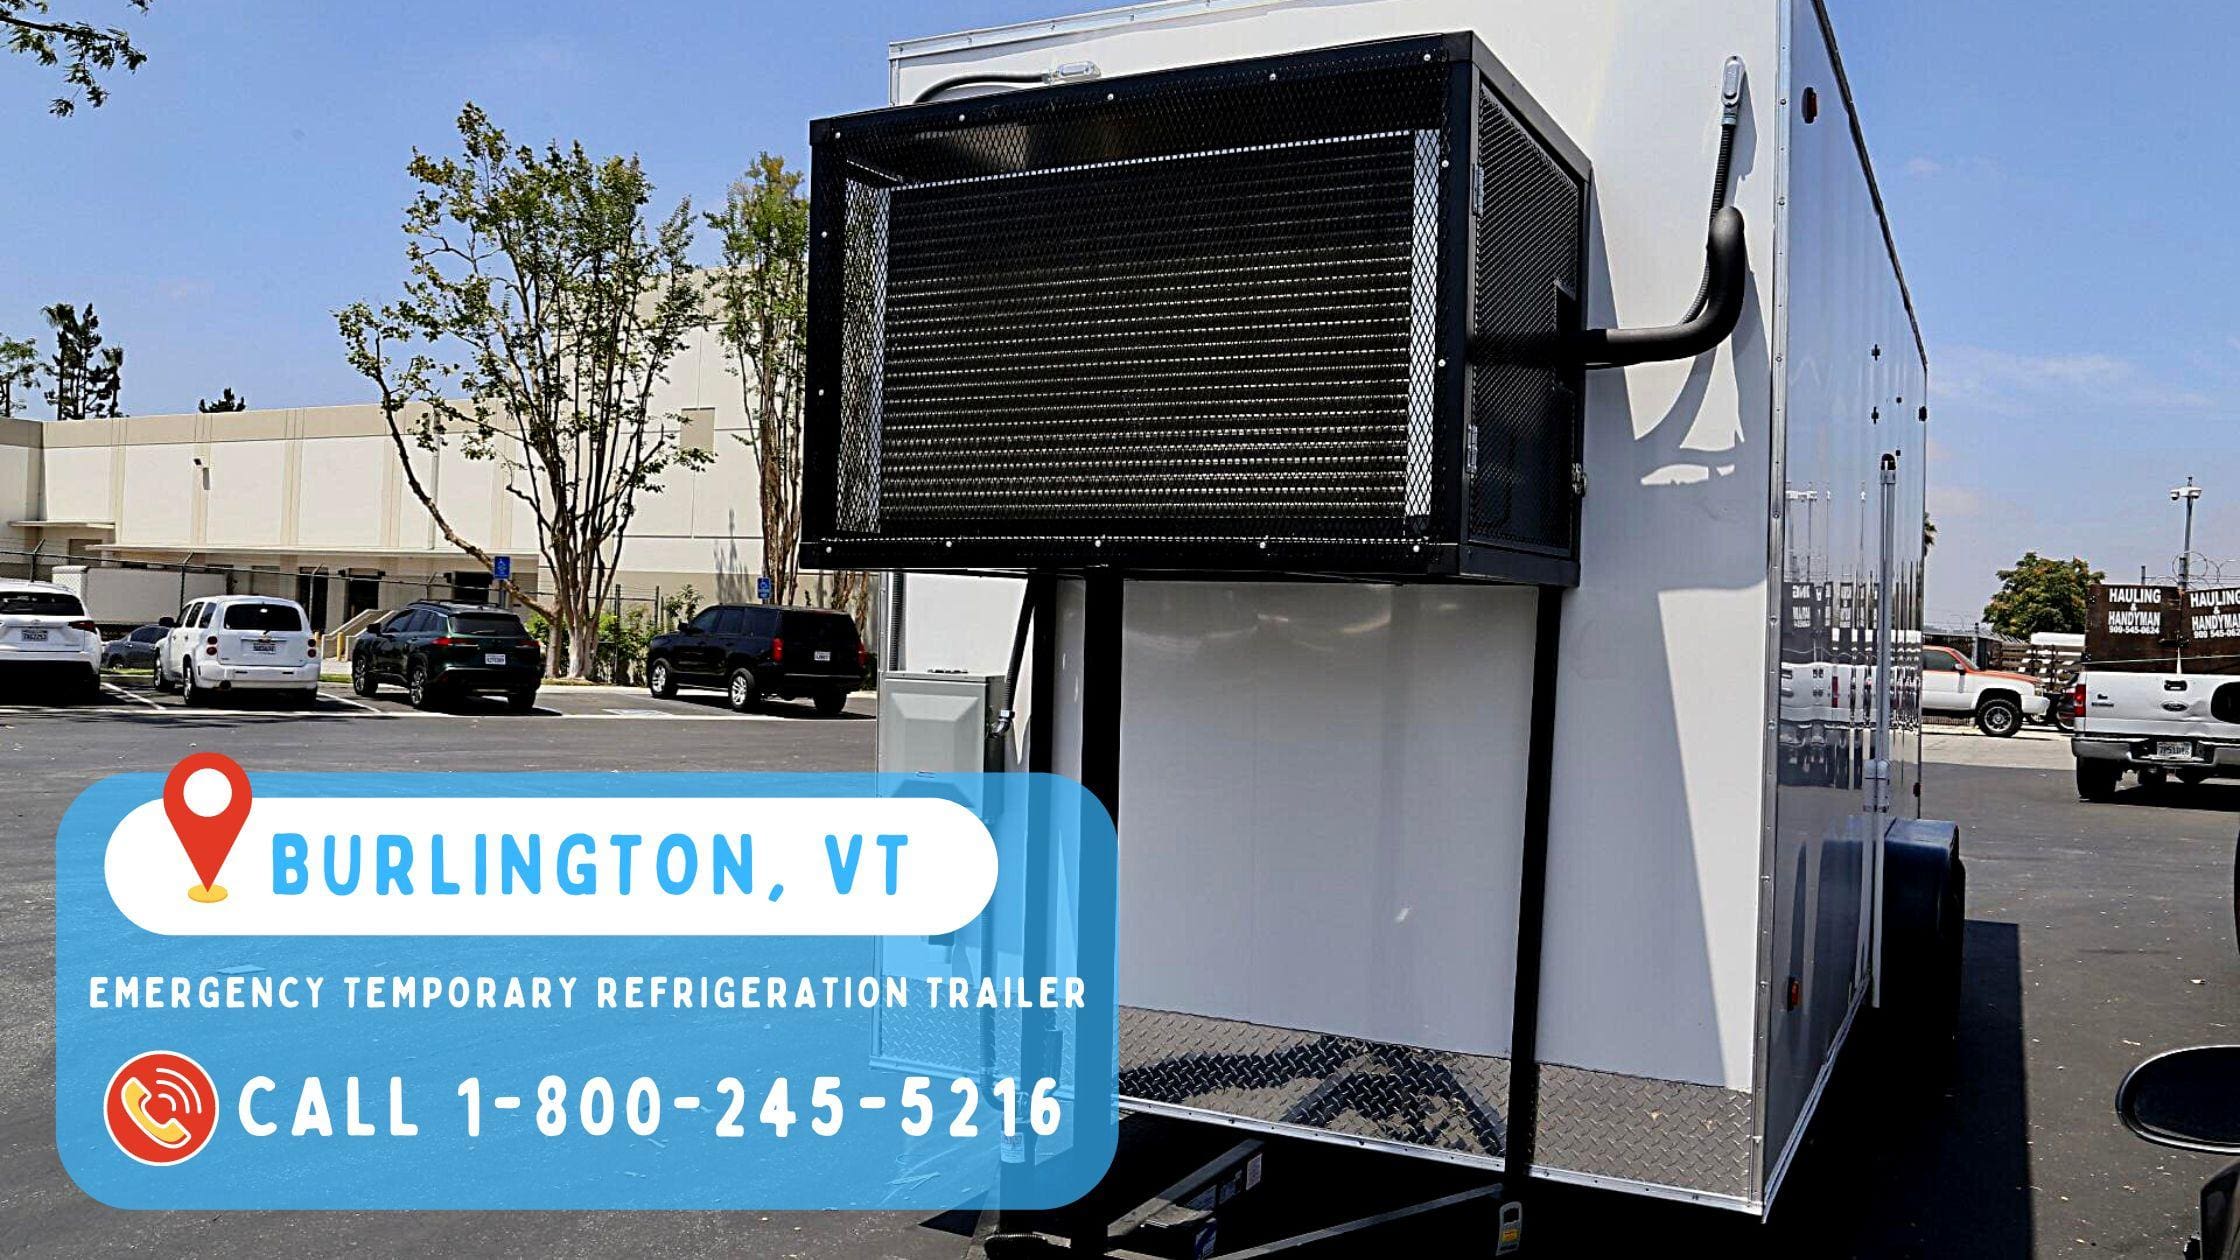 Emergency Temporary refrigeration trailer in Burlington